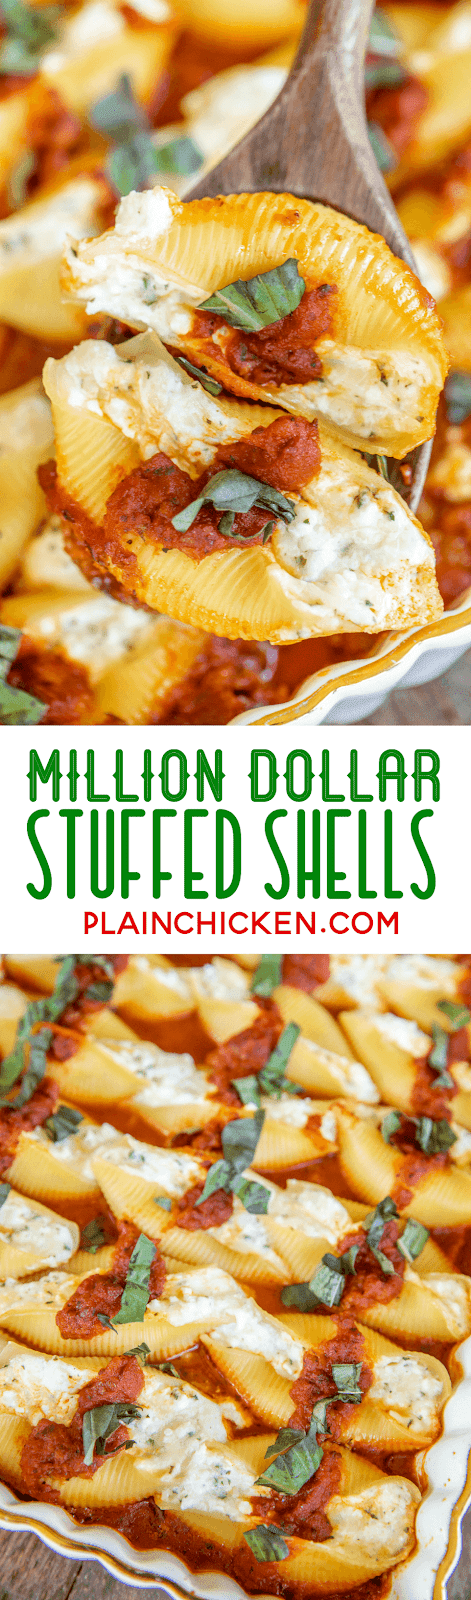 Million Dollar Stuffed Shells Plain Chicken